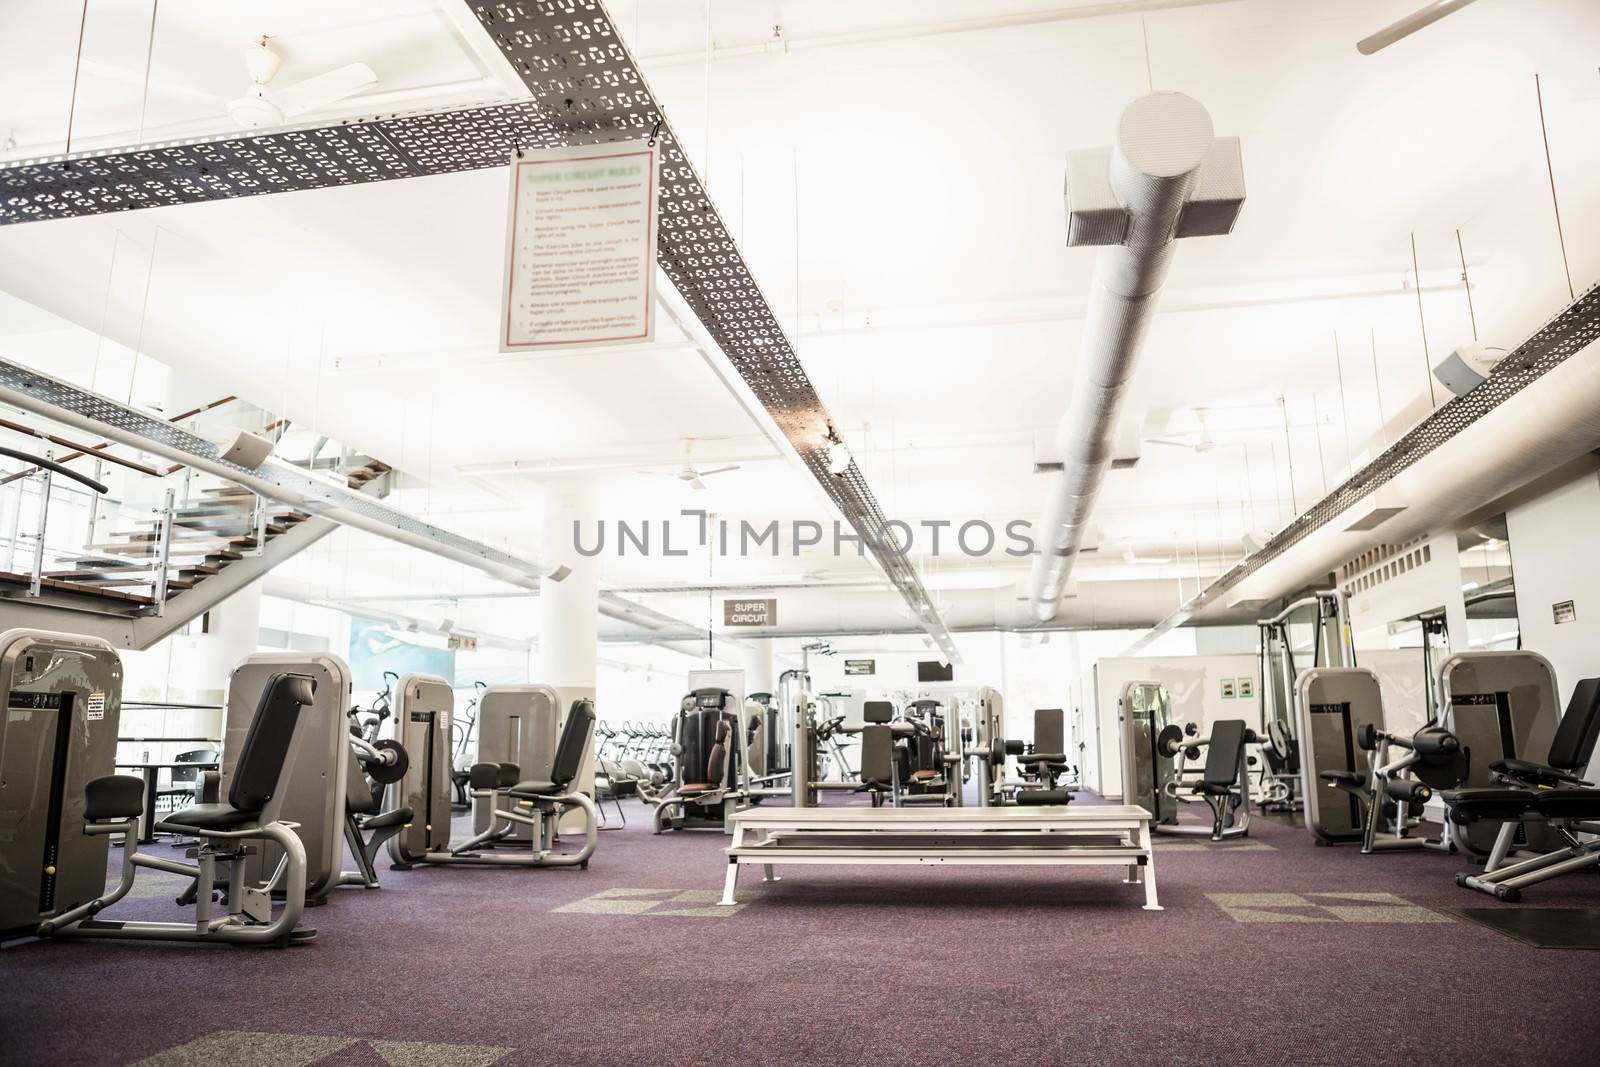 Gym with no people by Wavebreakmedia